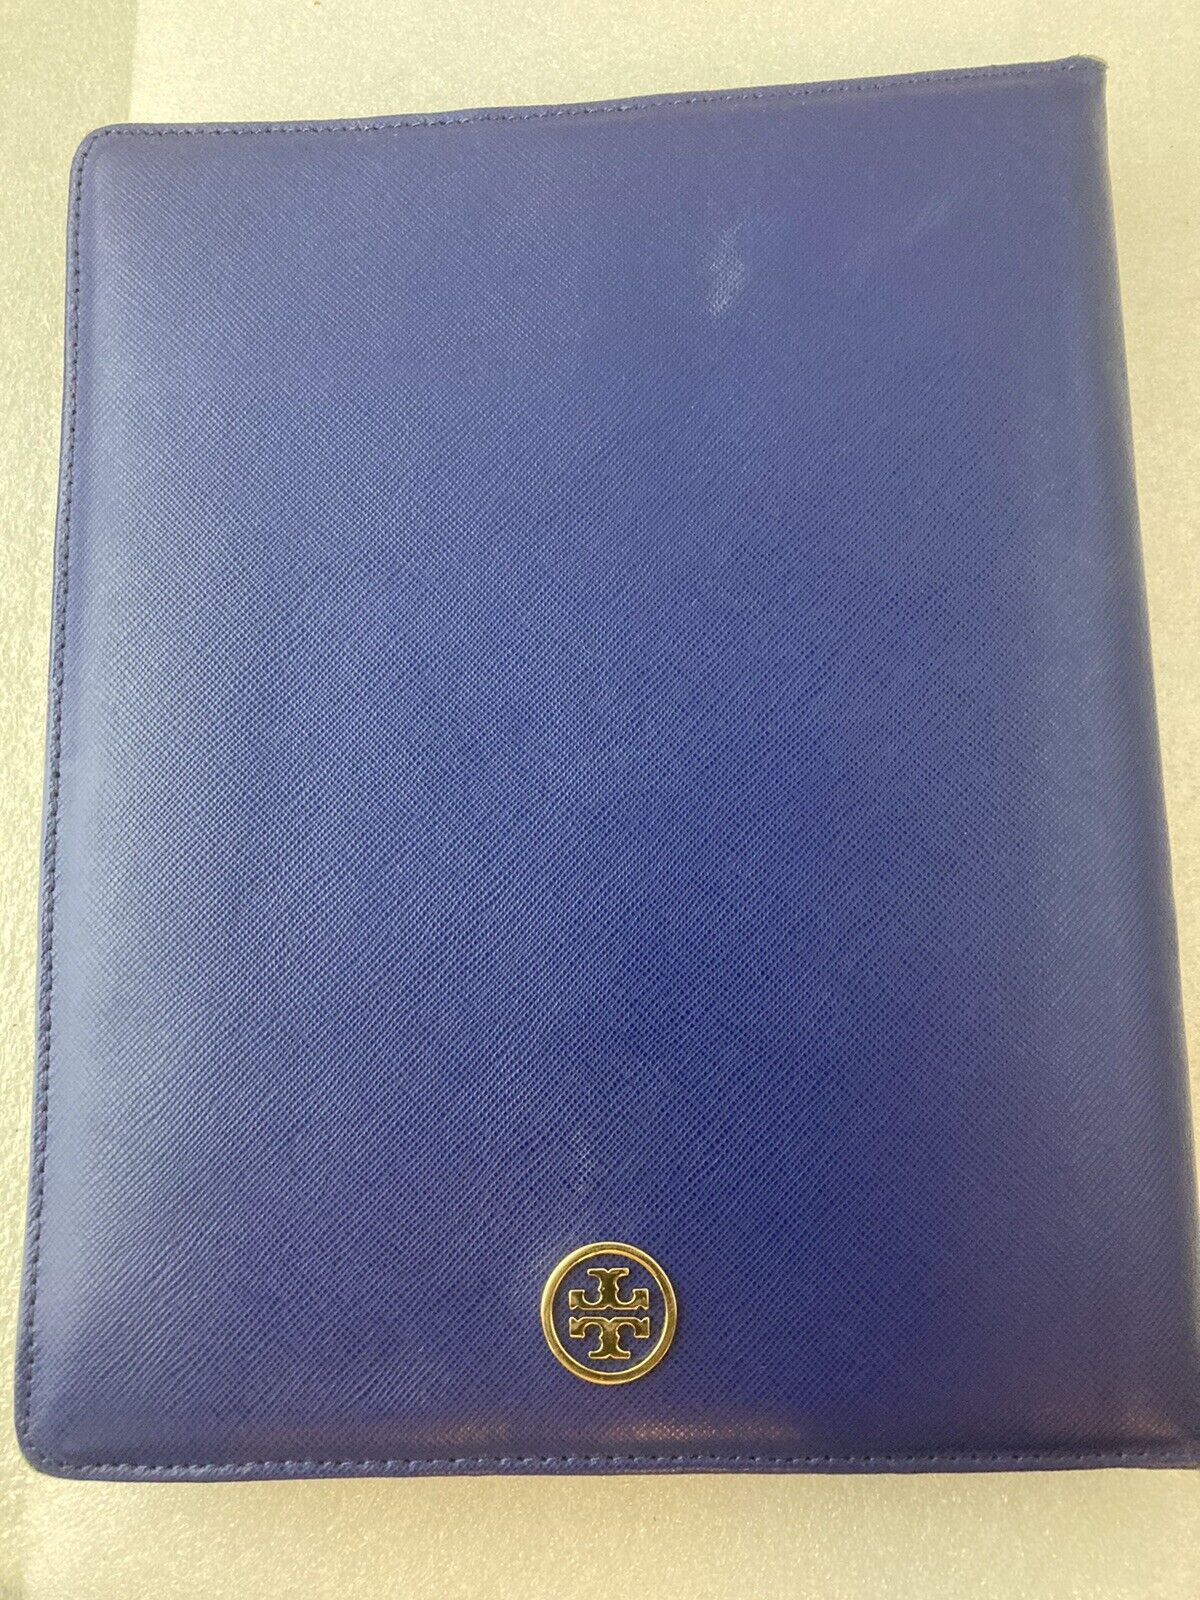 TORY BURCH Cobalt Blue Leather iPad Case